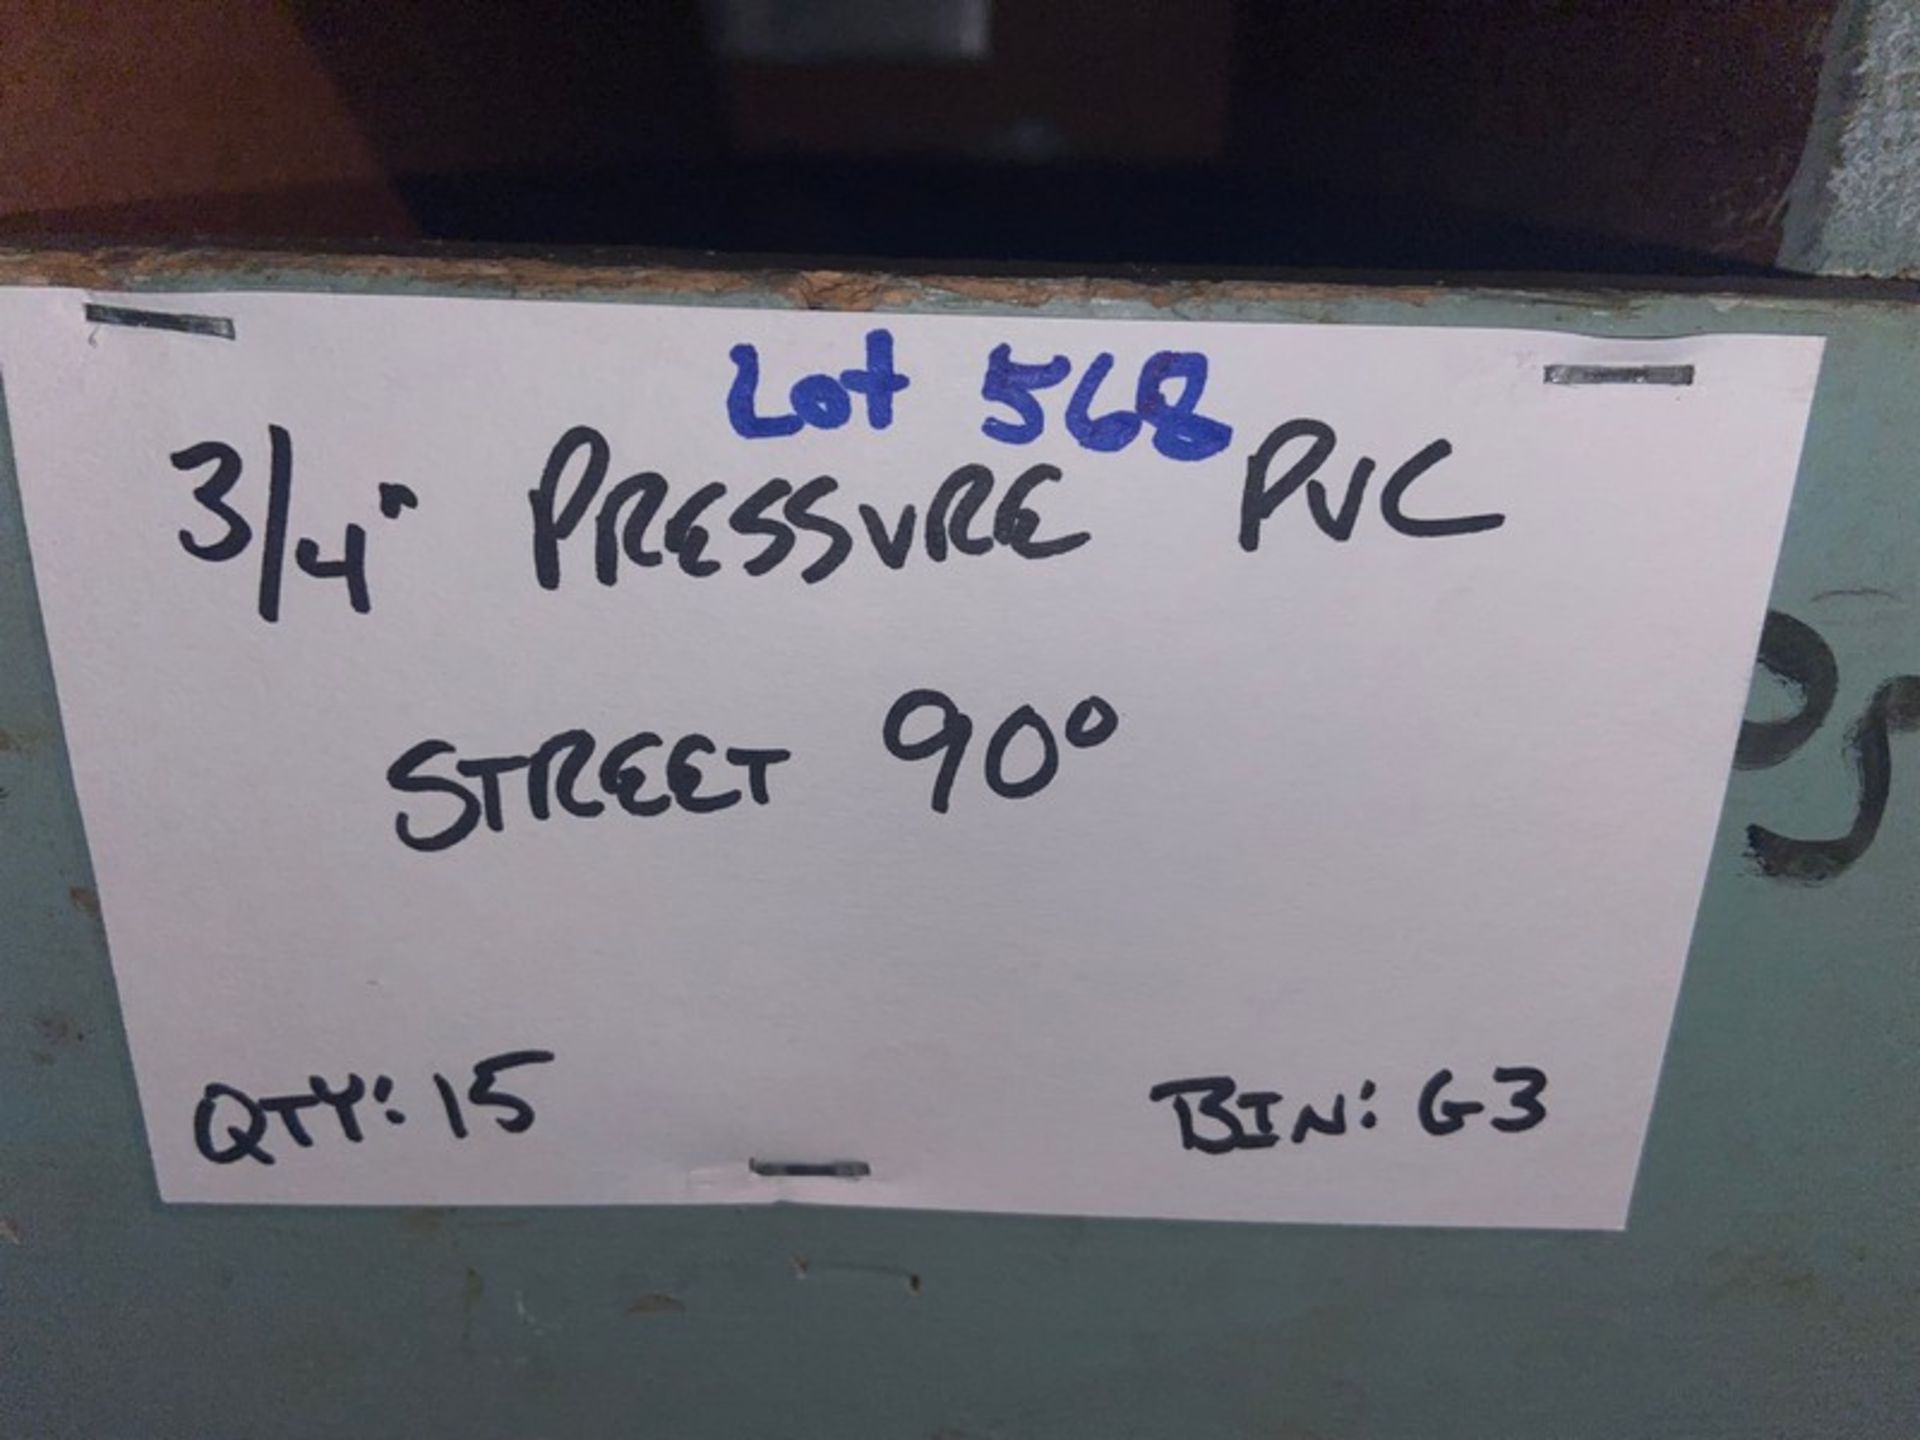 (15) 3/4” Pressure PVC Stree5 (Bin:G3), Includes (48) 3/4” Pressure PVC 45’ (Bin:G3) (LOCATED IN - Image 4 of 8